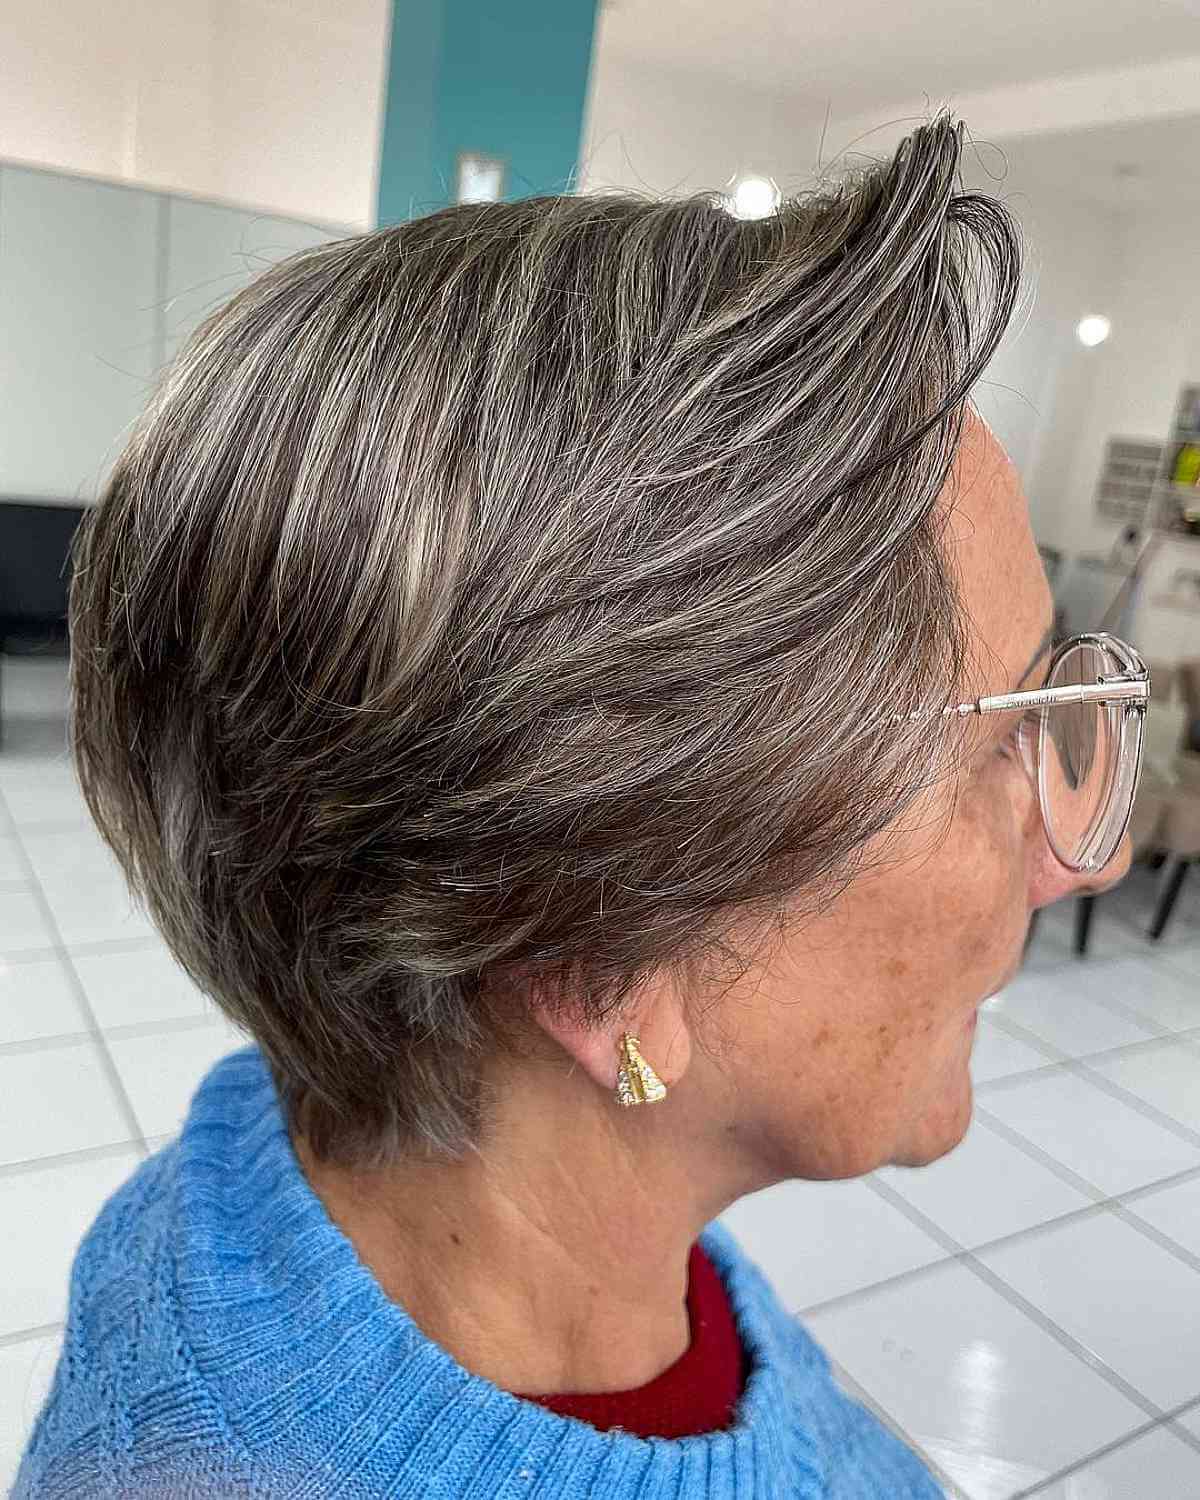 Wispy Pixie Cut on Fine Hair Ladies in Their 60s